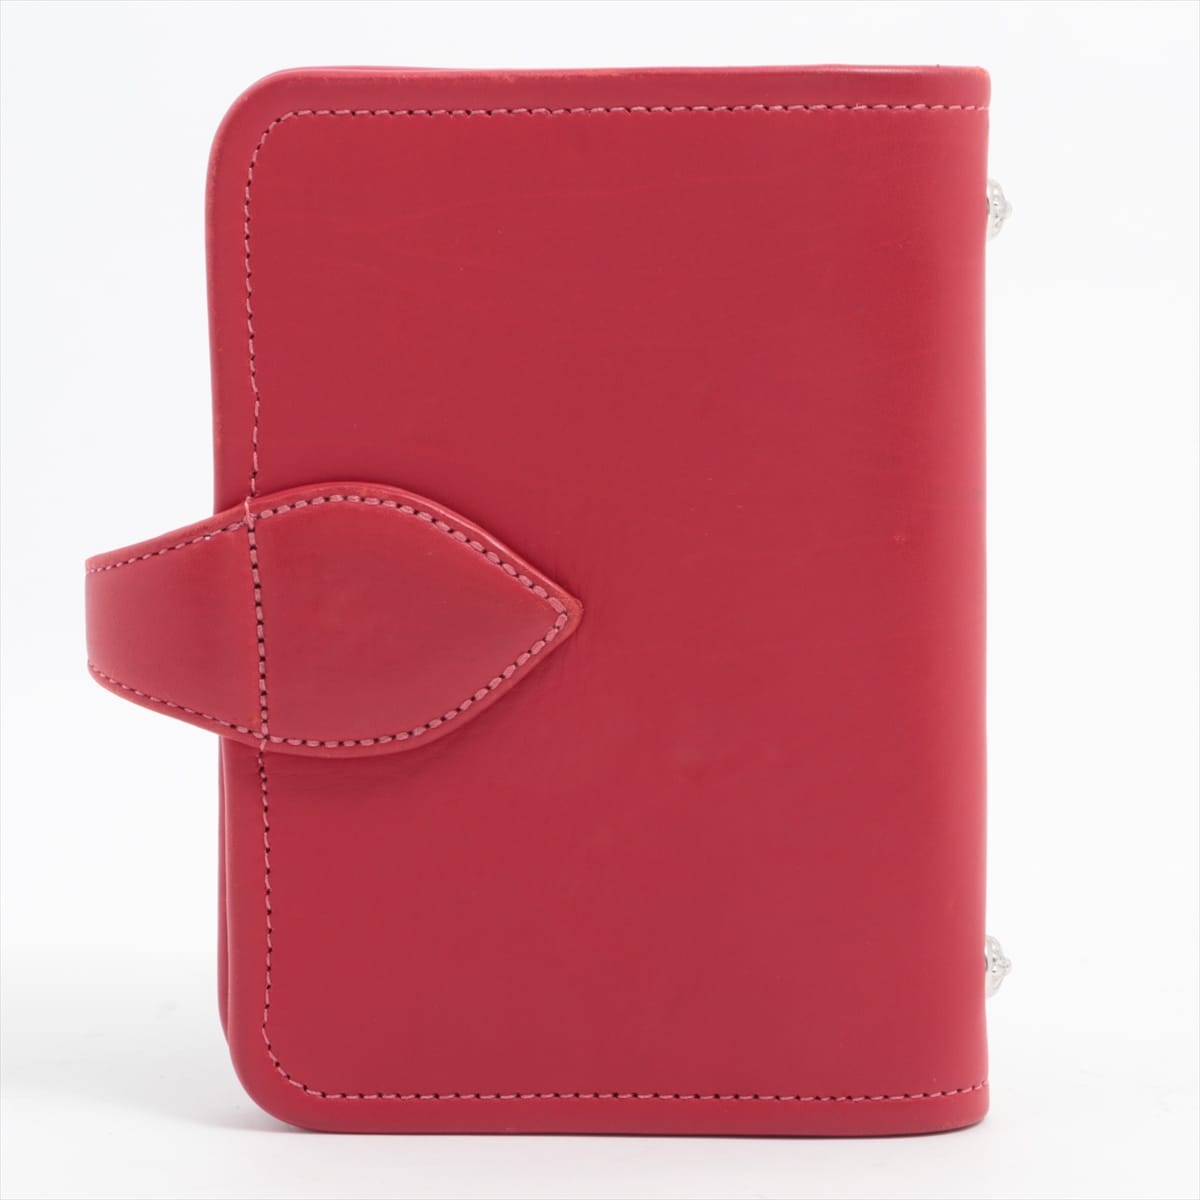 Chrome Hearts Agenda Mini Plain Notebook cover Leather With invoice